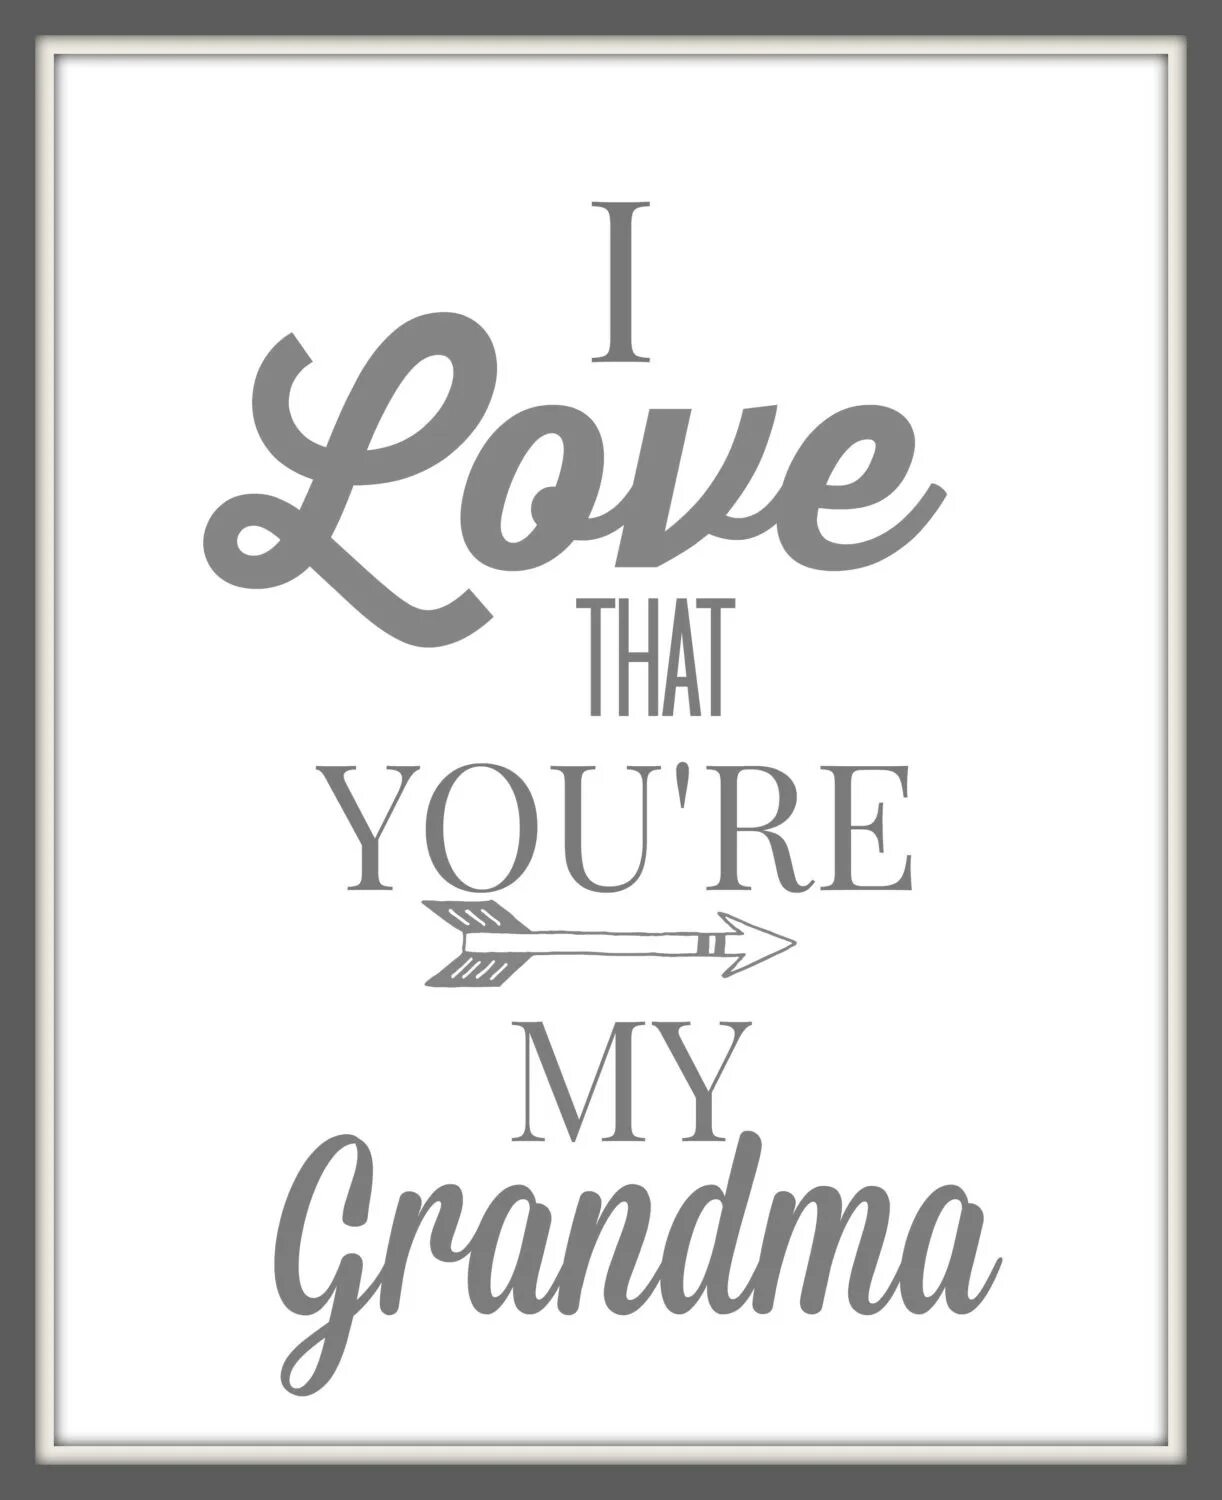 Grandma's love. I Love you grandma. Quotes about grandma. Grandmother надпись. My grandmother надпись.